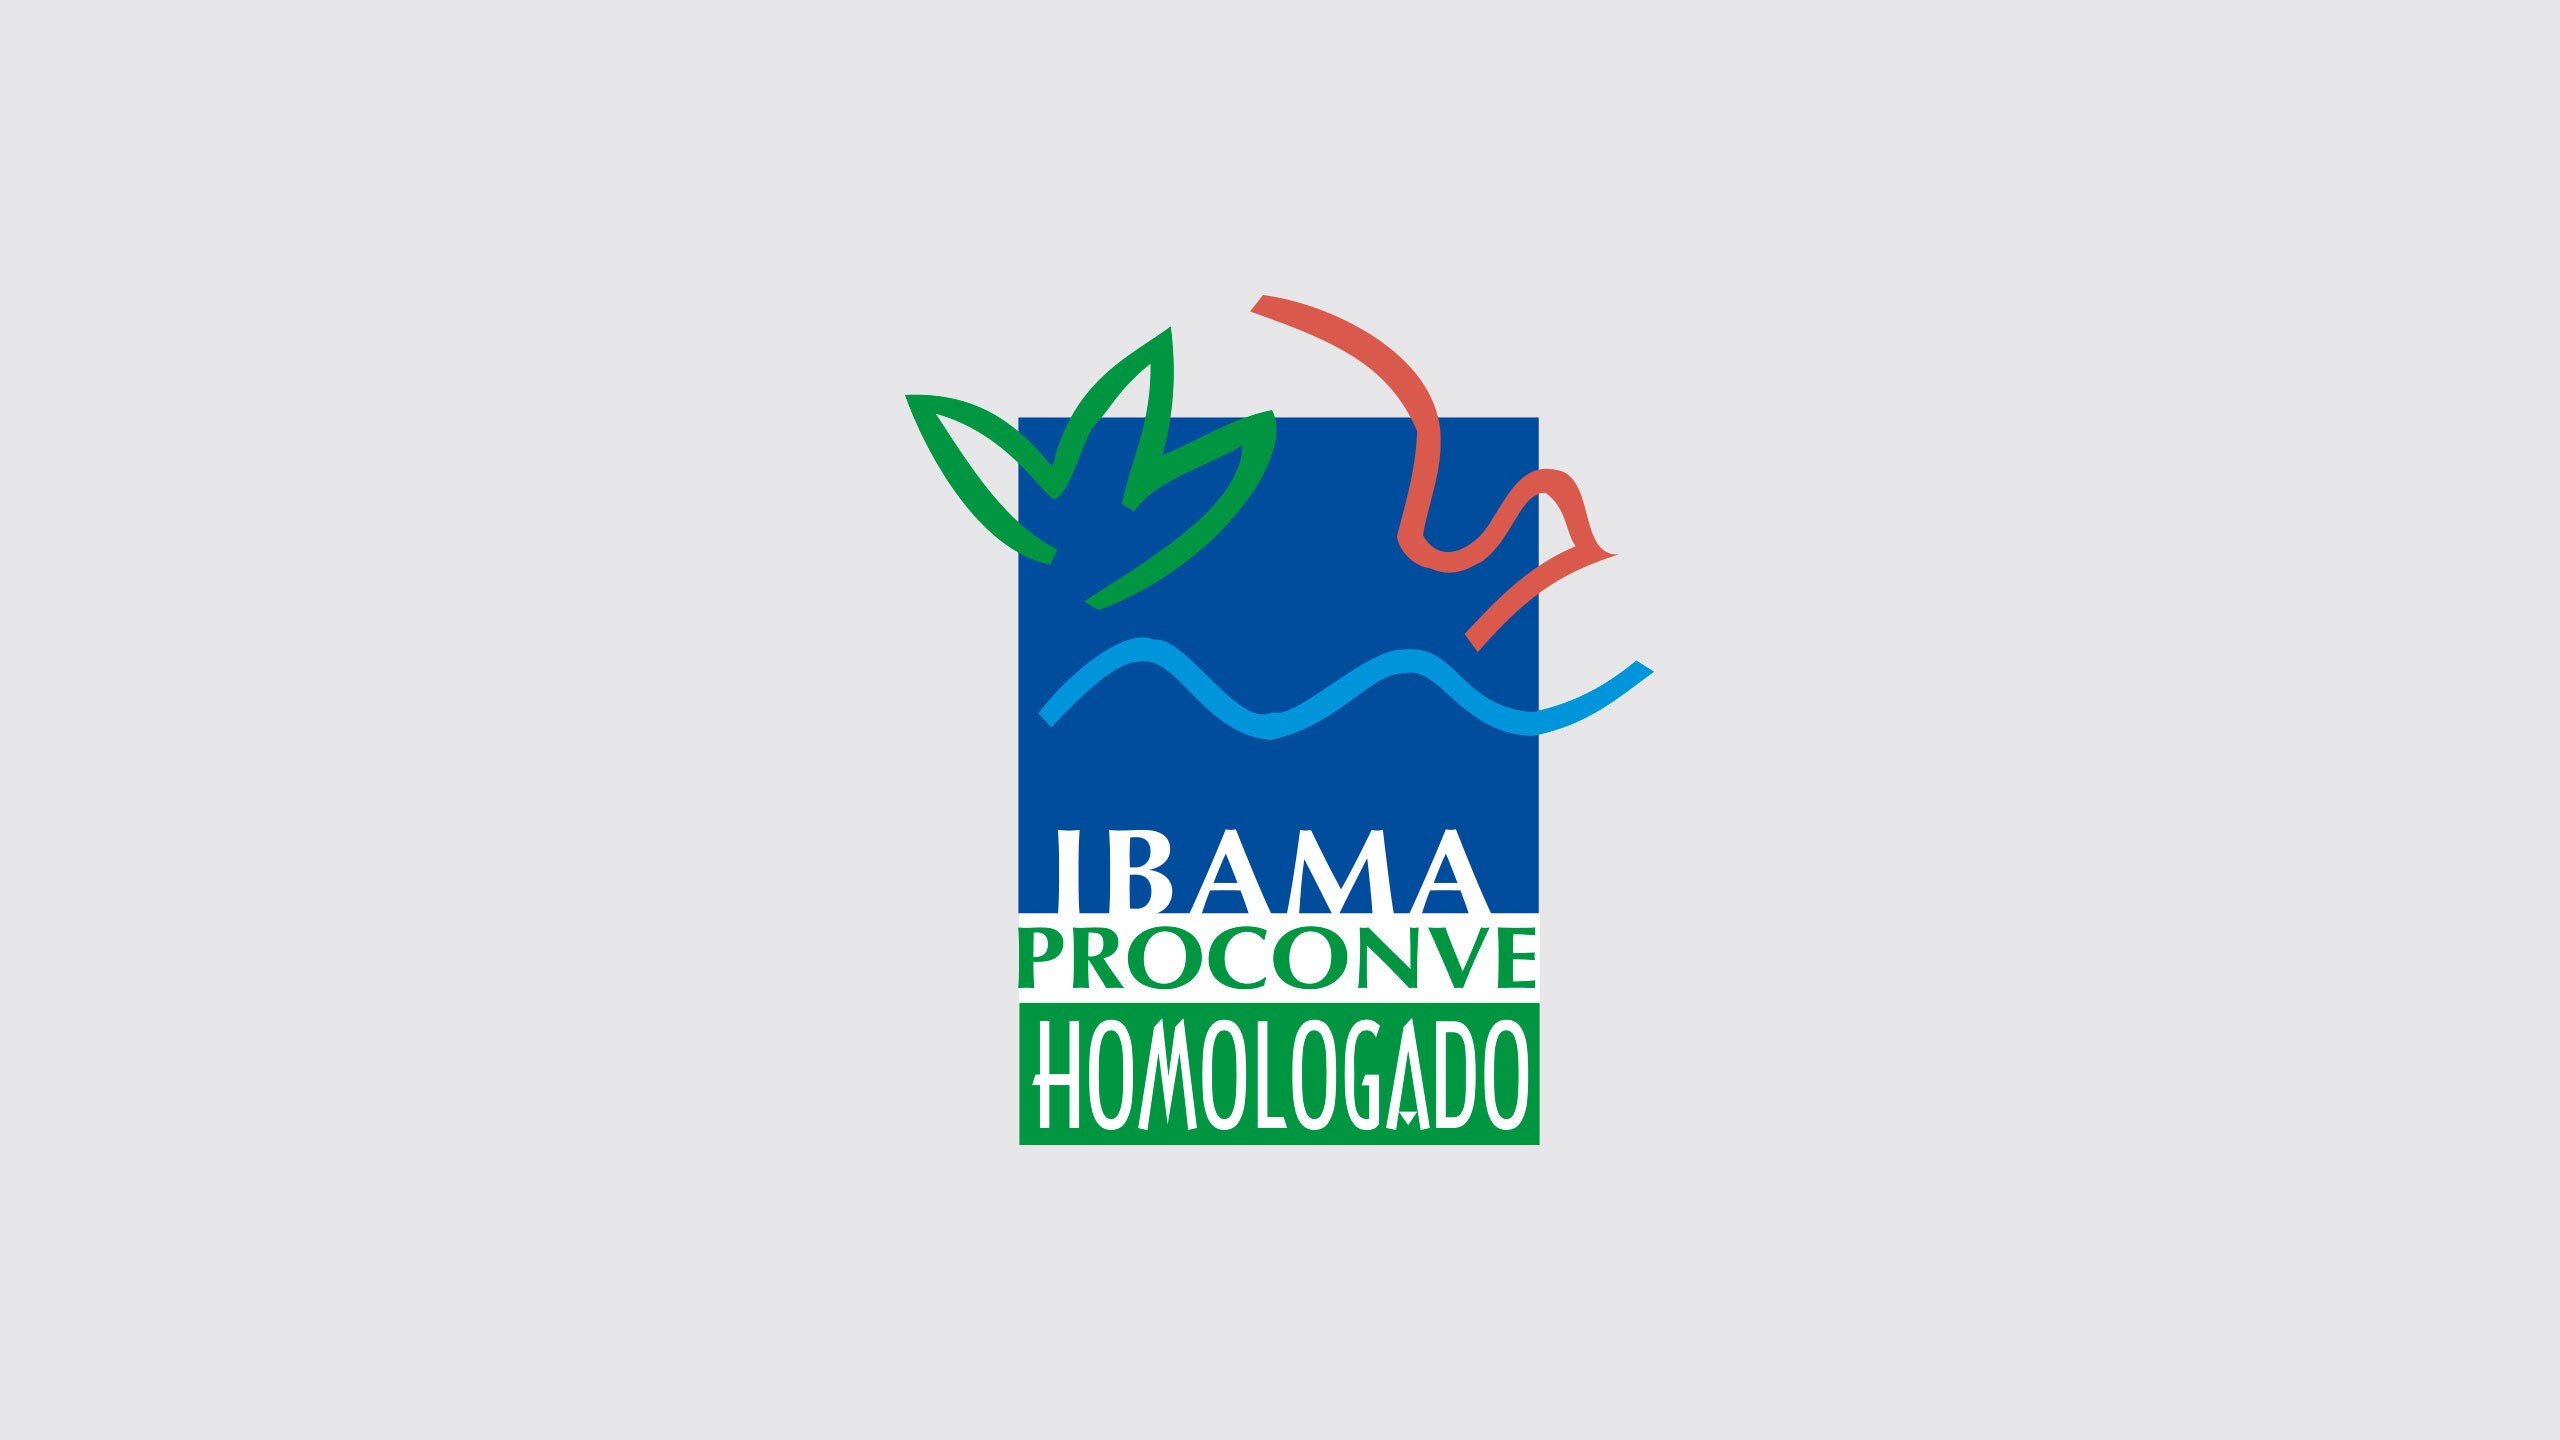 IBAMA PROCONVE HOMOLOGADO